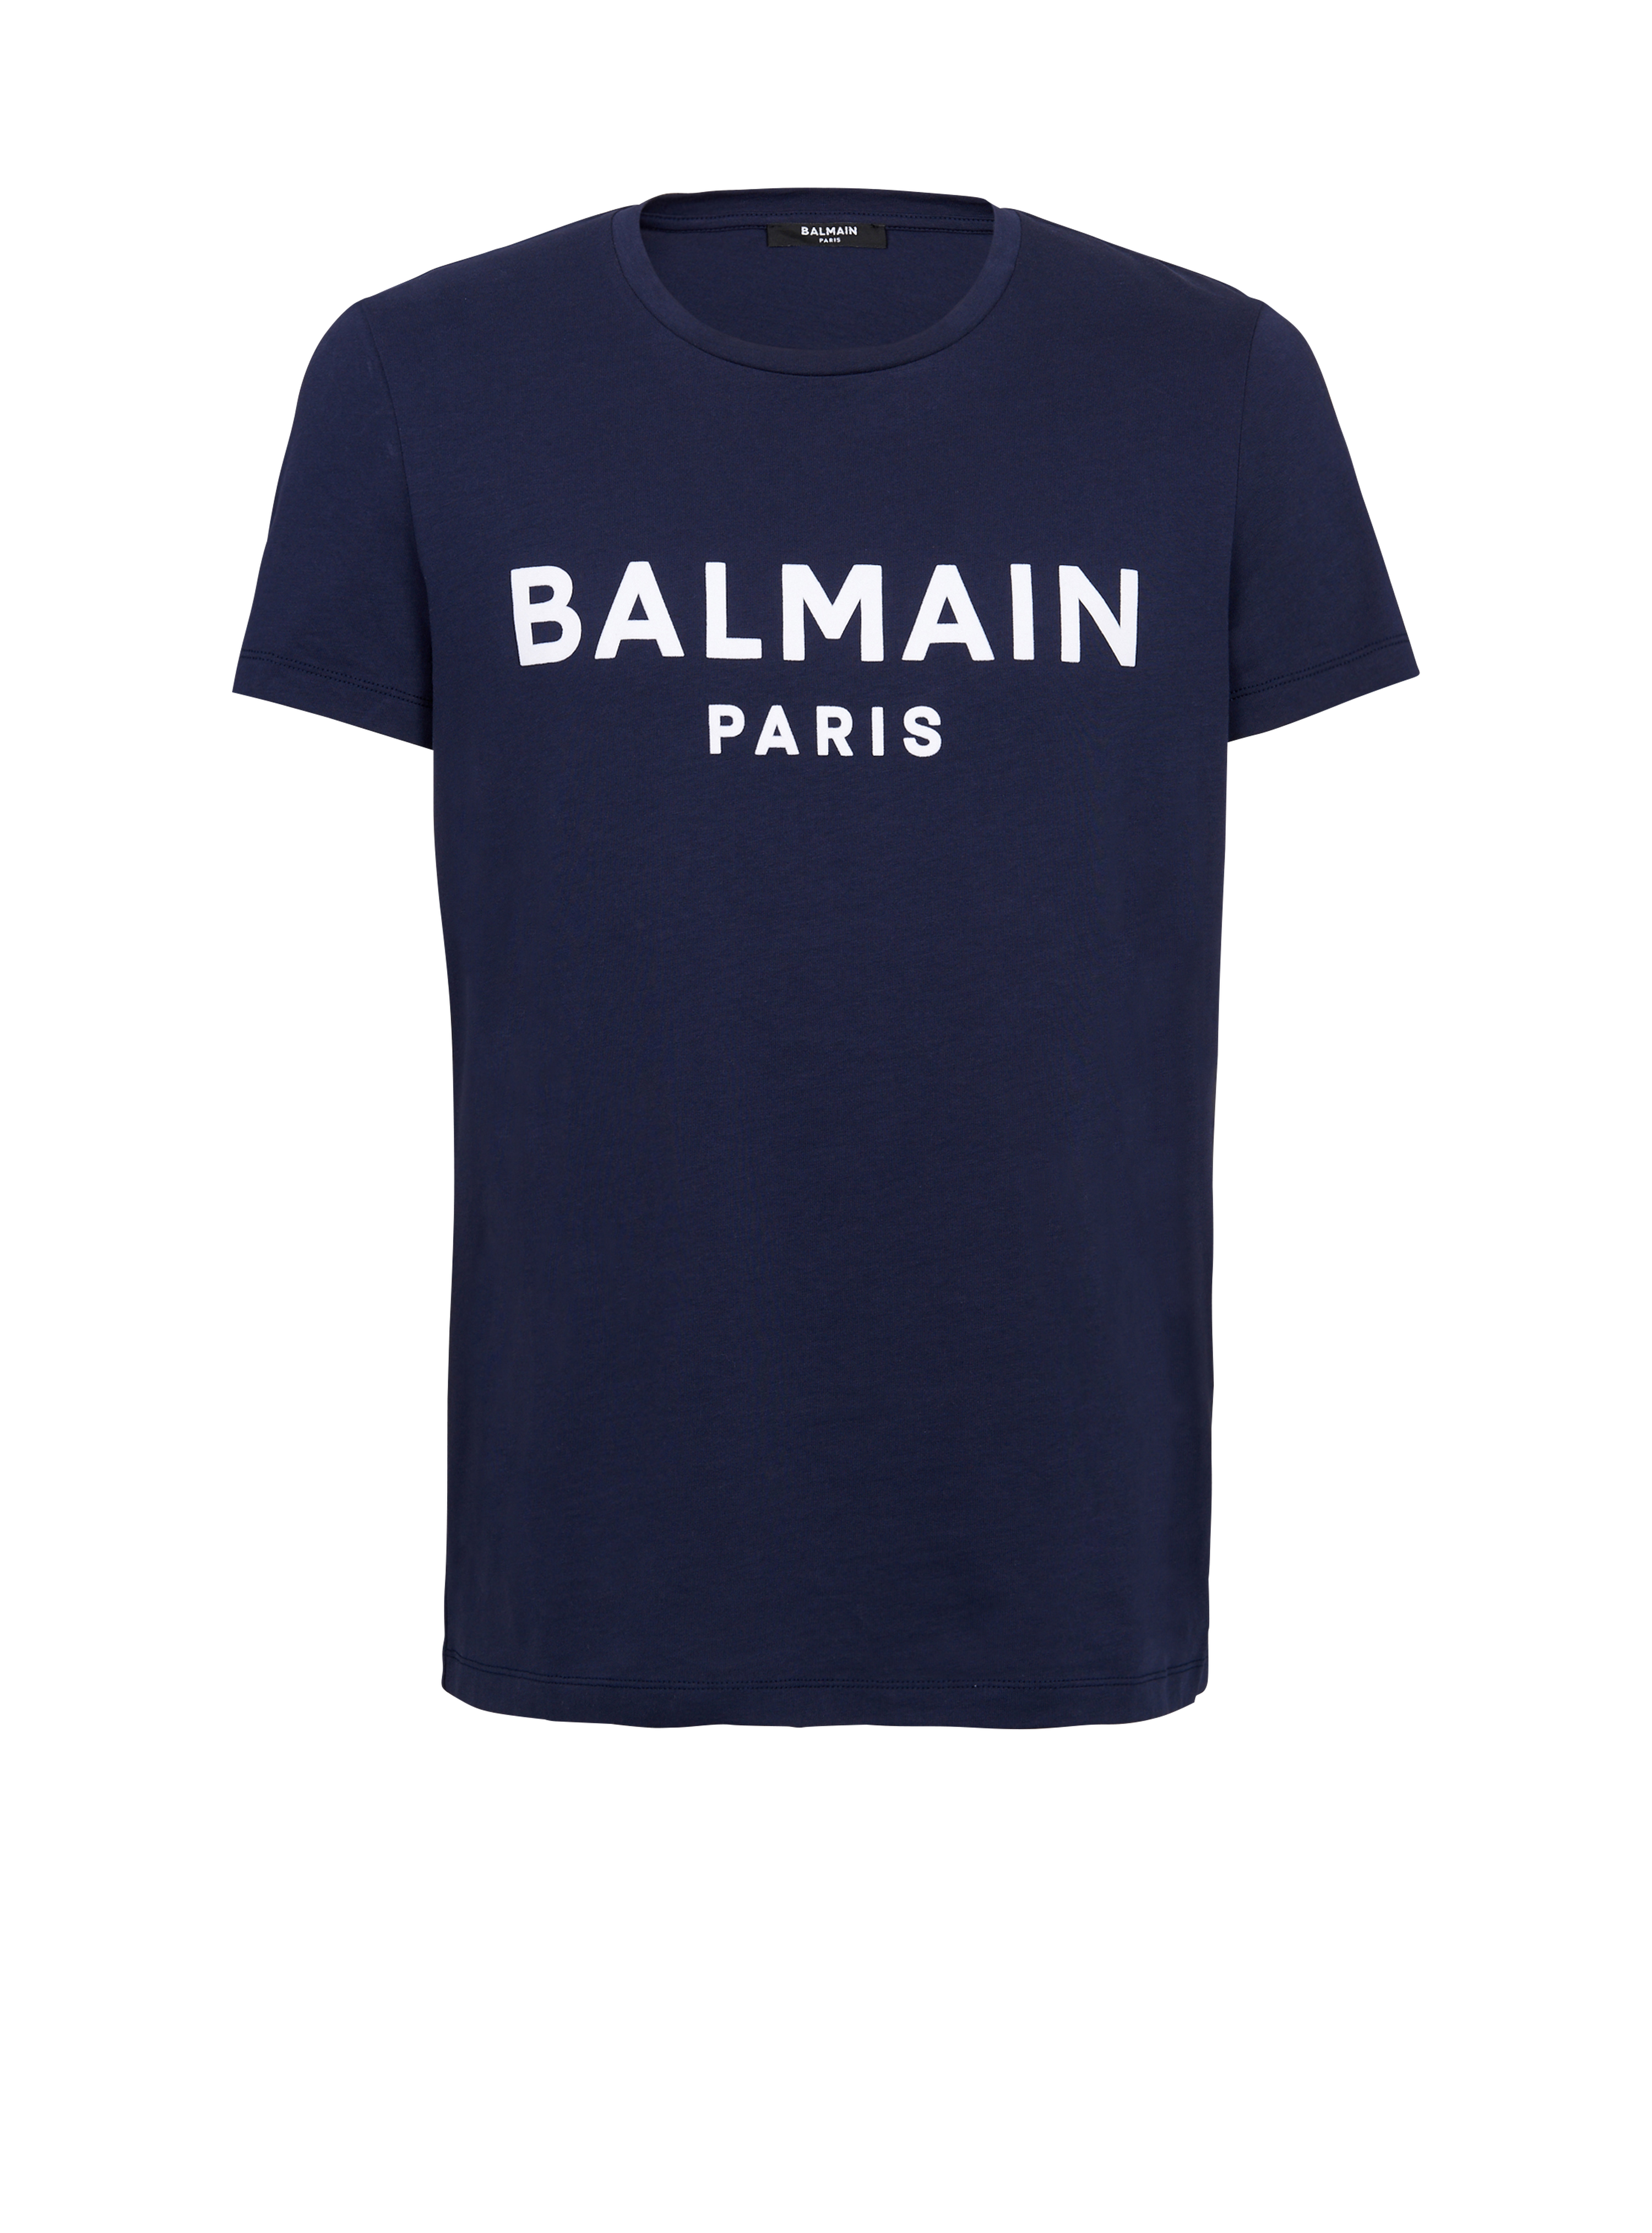 T-shirt en coton floqué logo Balmain Paris, bleu marine